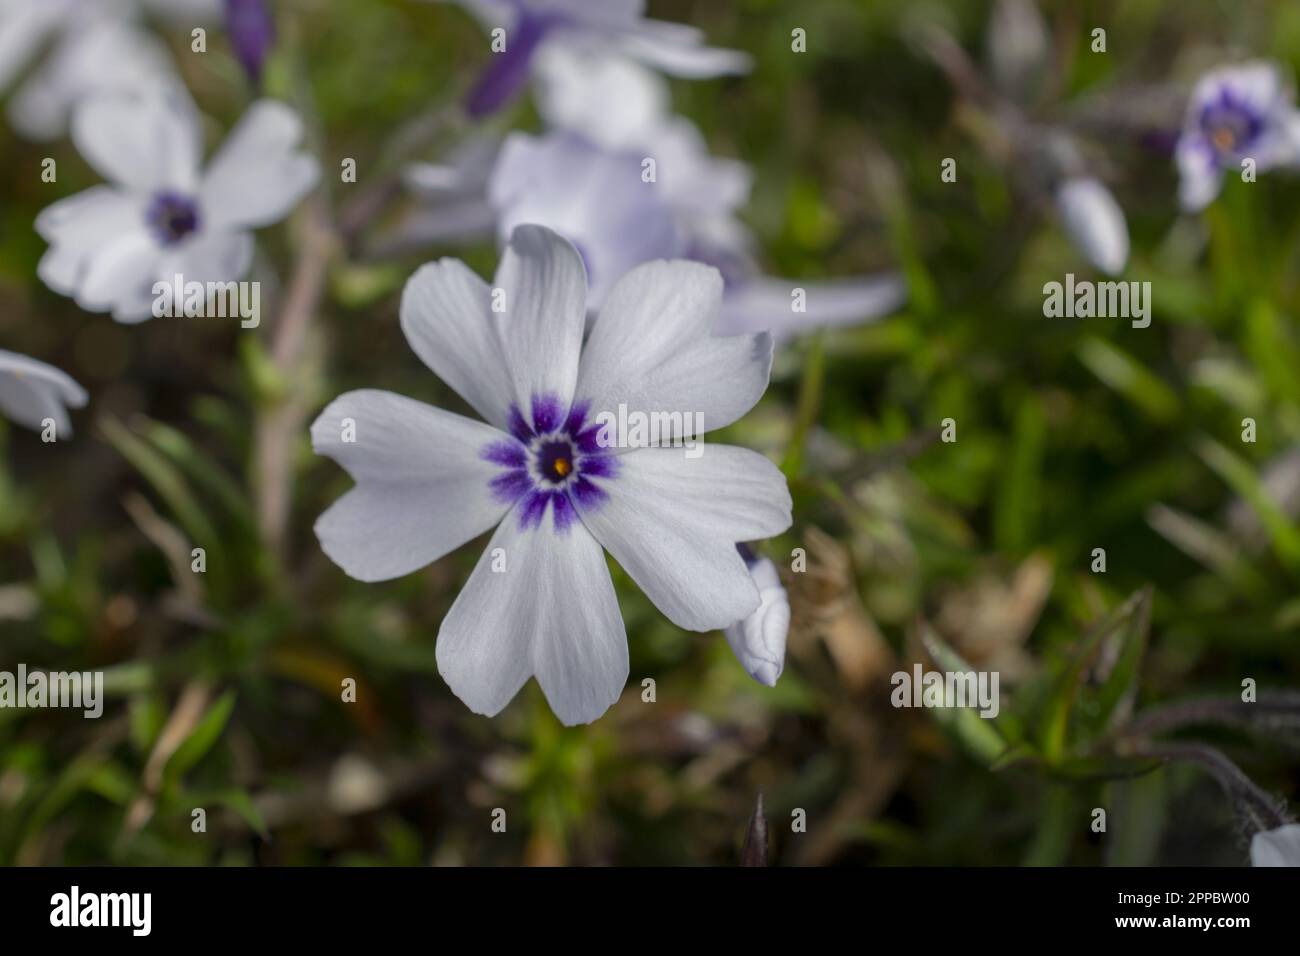 White with a blue eye moss phlox Bavaria. High quality photo Stock Photo